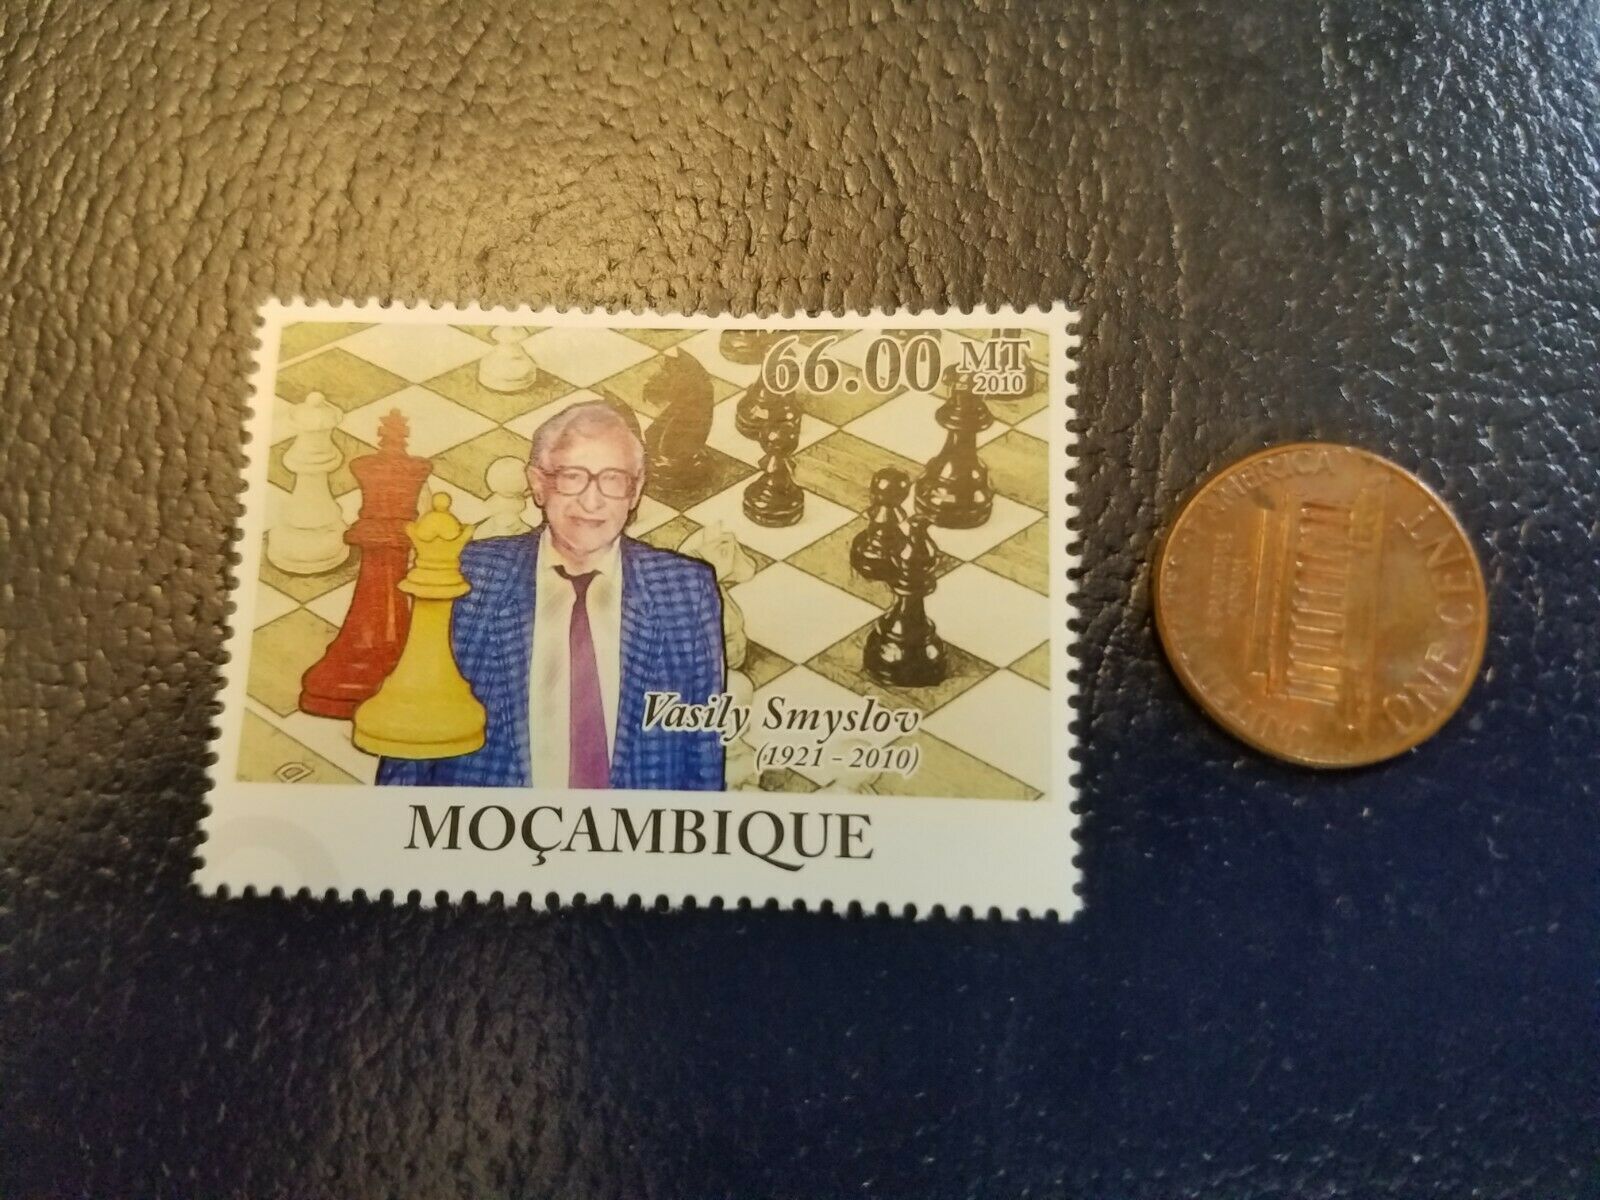 Vasily Smyslov Mocambique Soviet And Russian Chess Grandmaster Stamp (b)